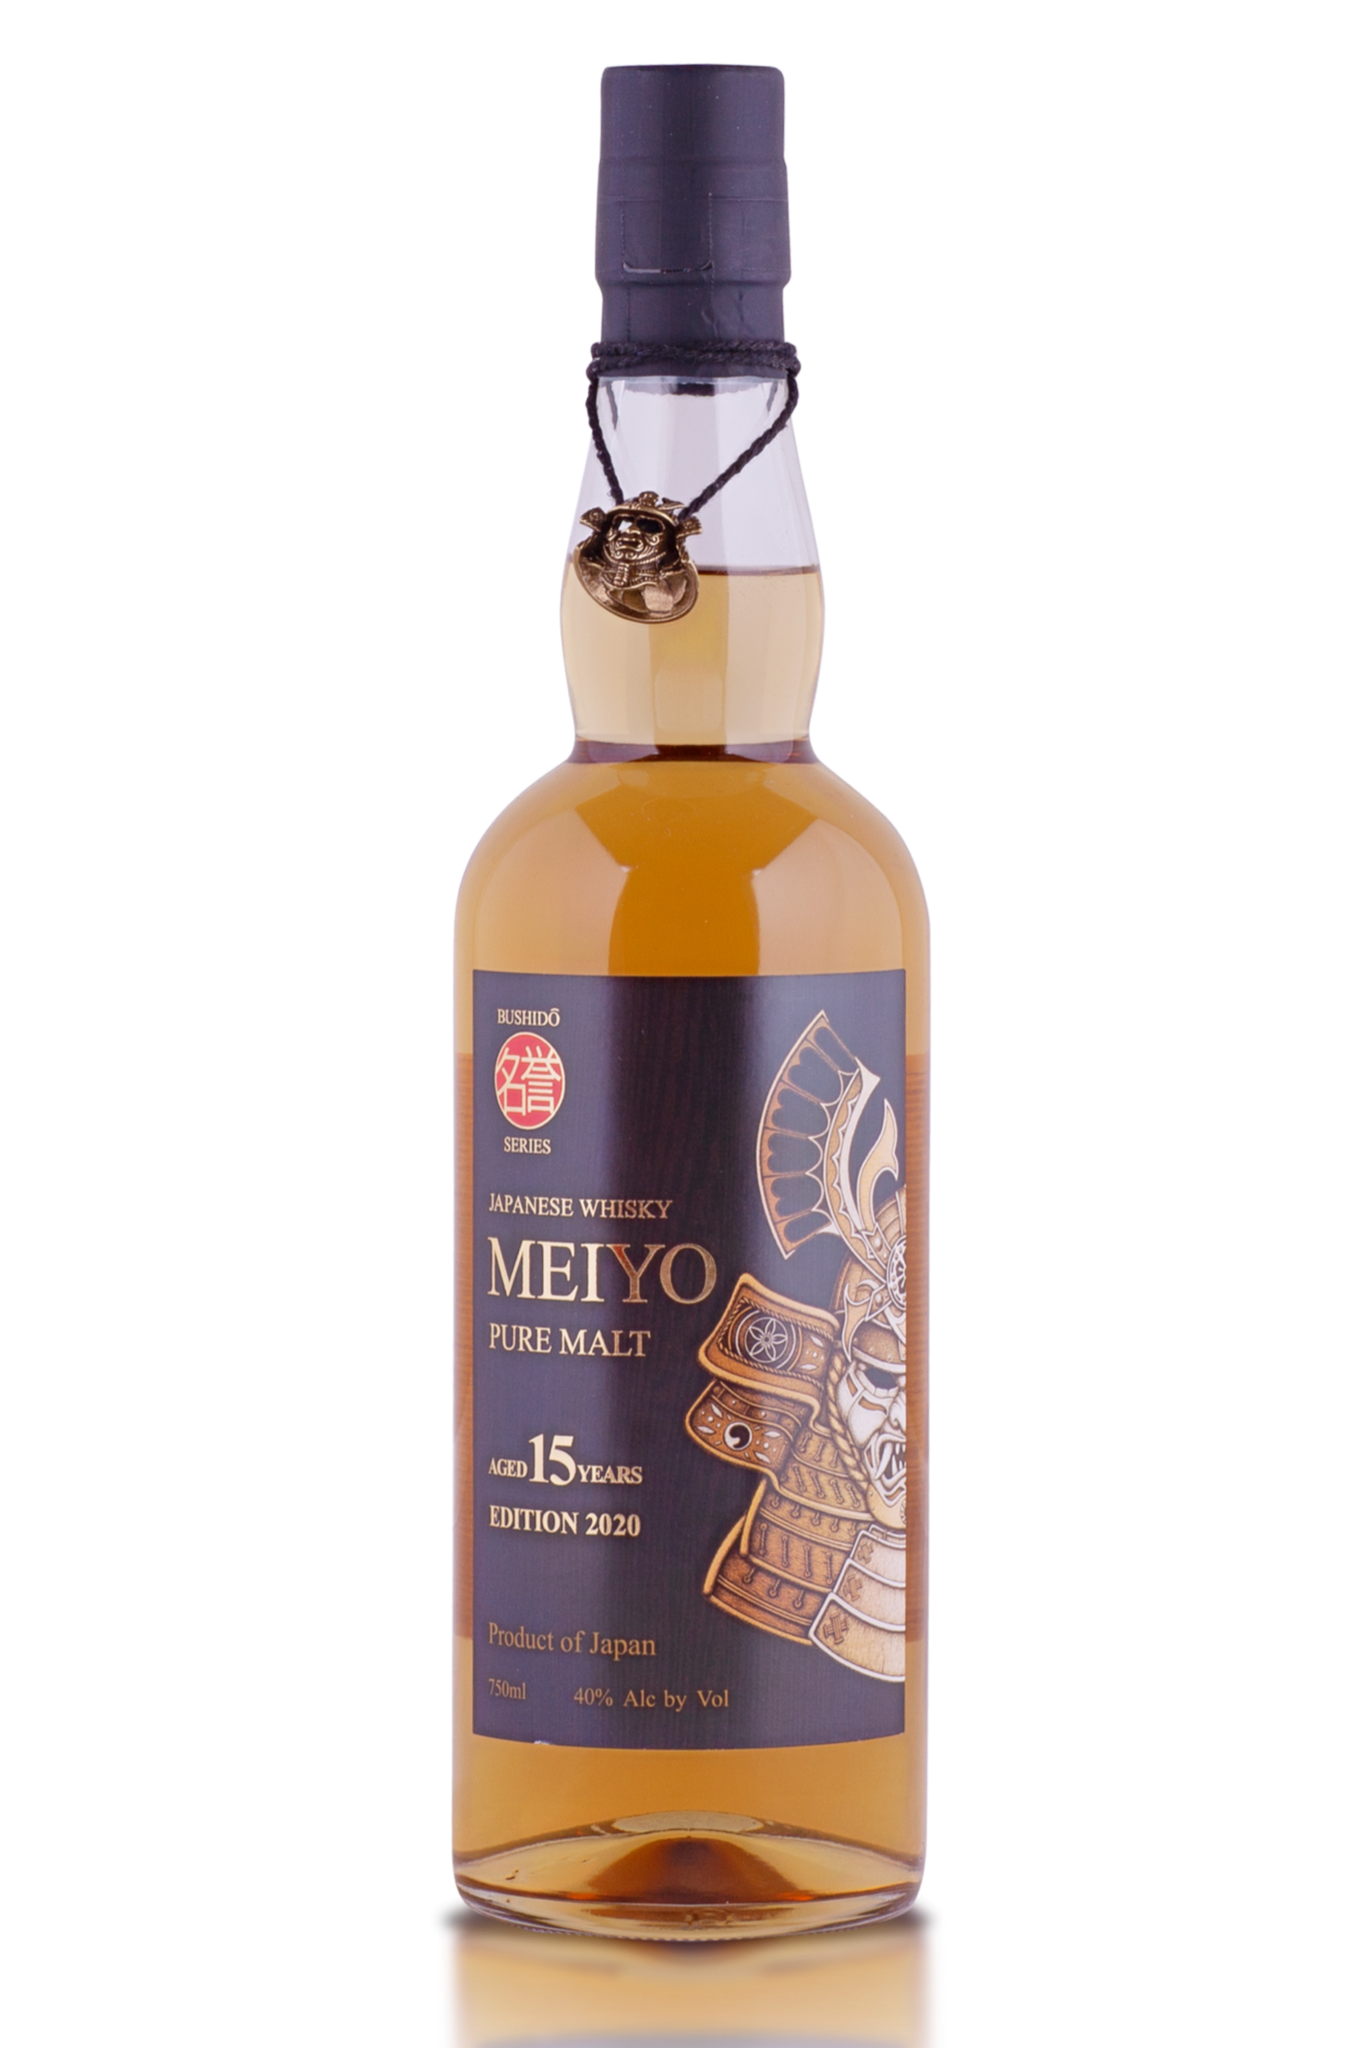 Meiyo "Bushido Series" Pure Malt Japanese Whisky 15yr Edition 2020 750mL